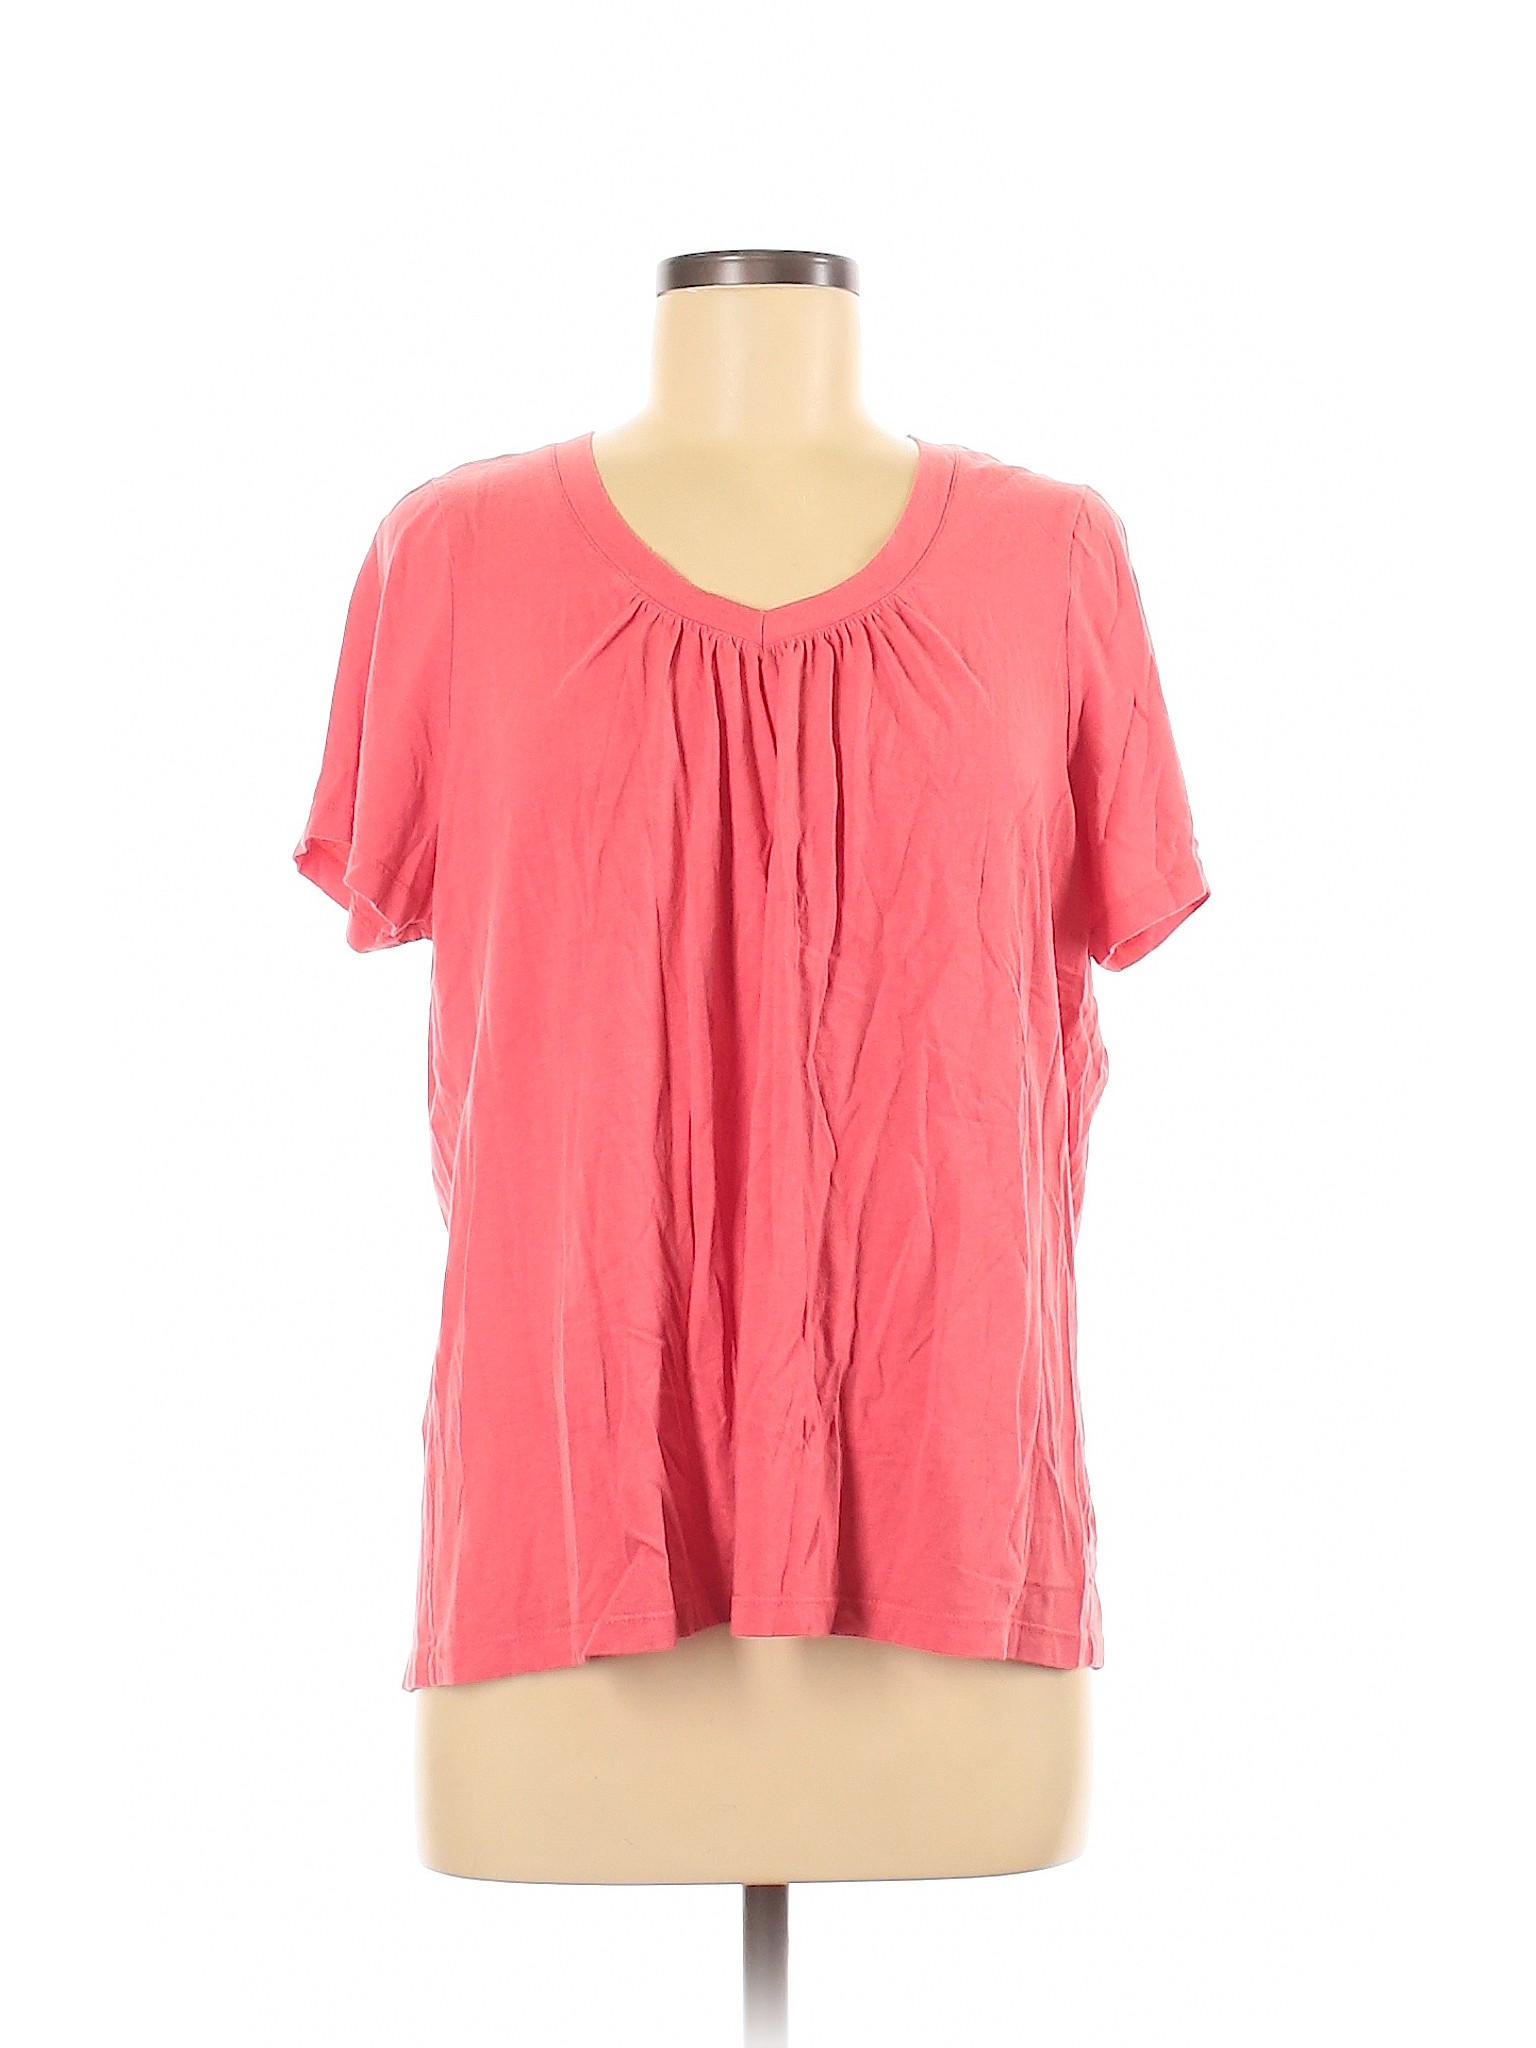 St. John's Bay Women Pink Short Sleeve T-Shirt 1X Plus | eBay